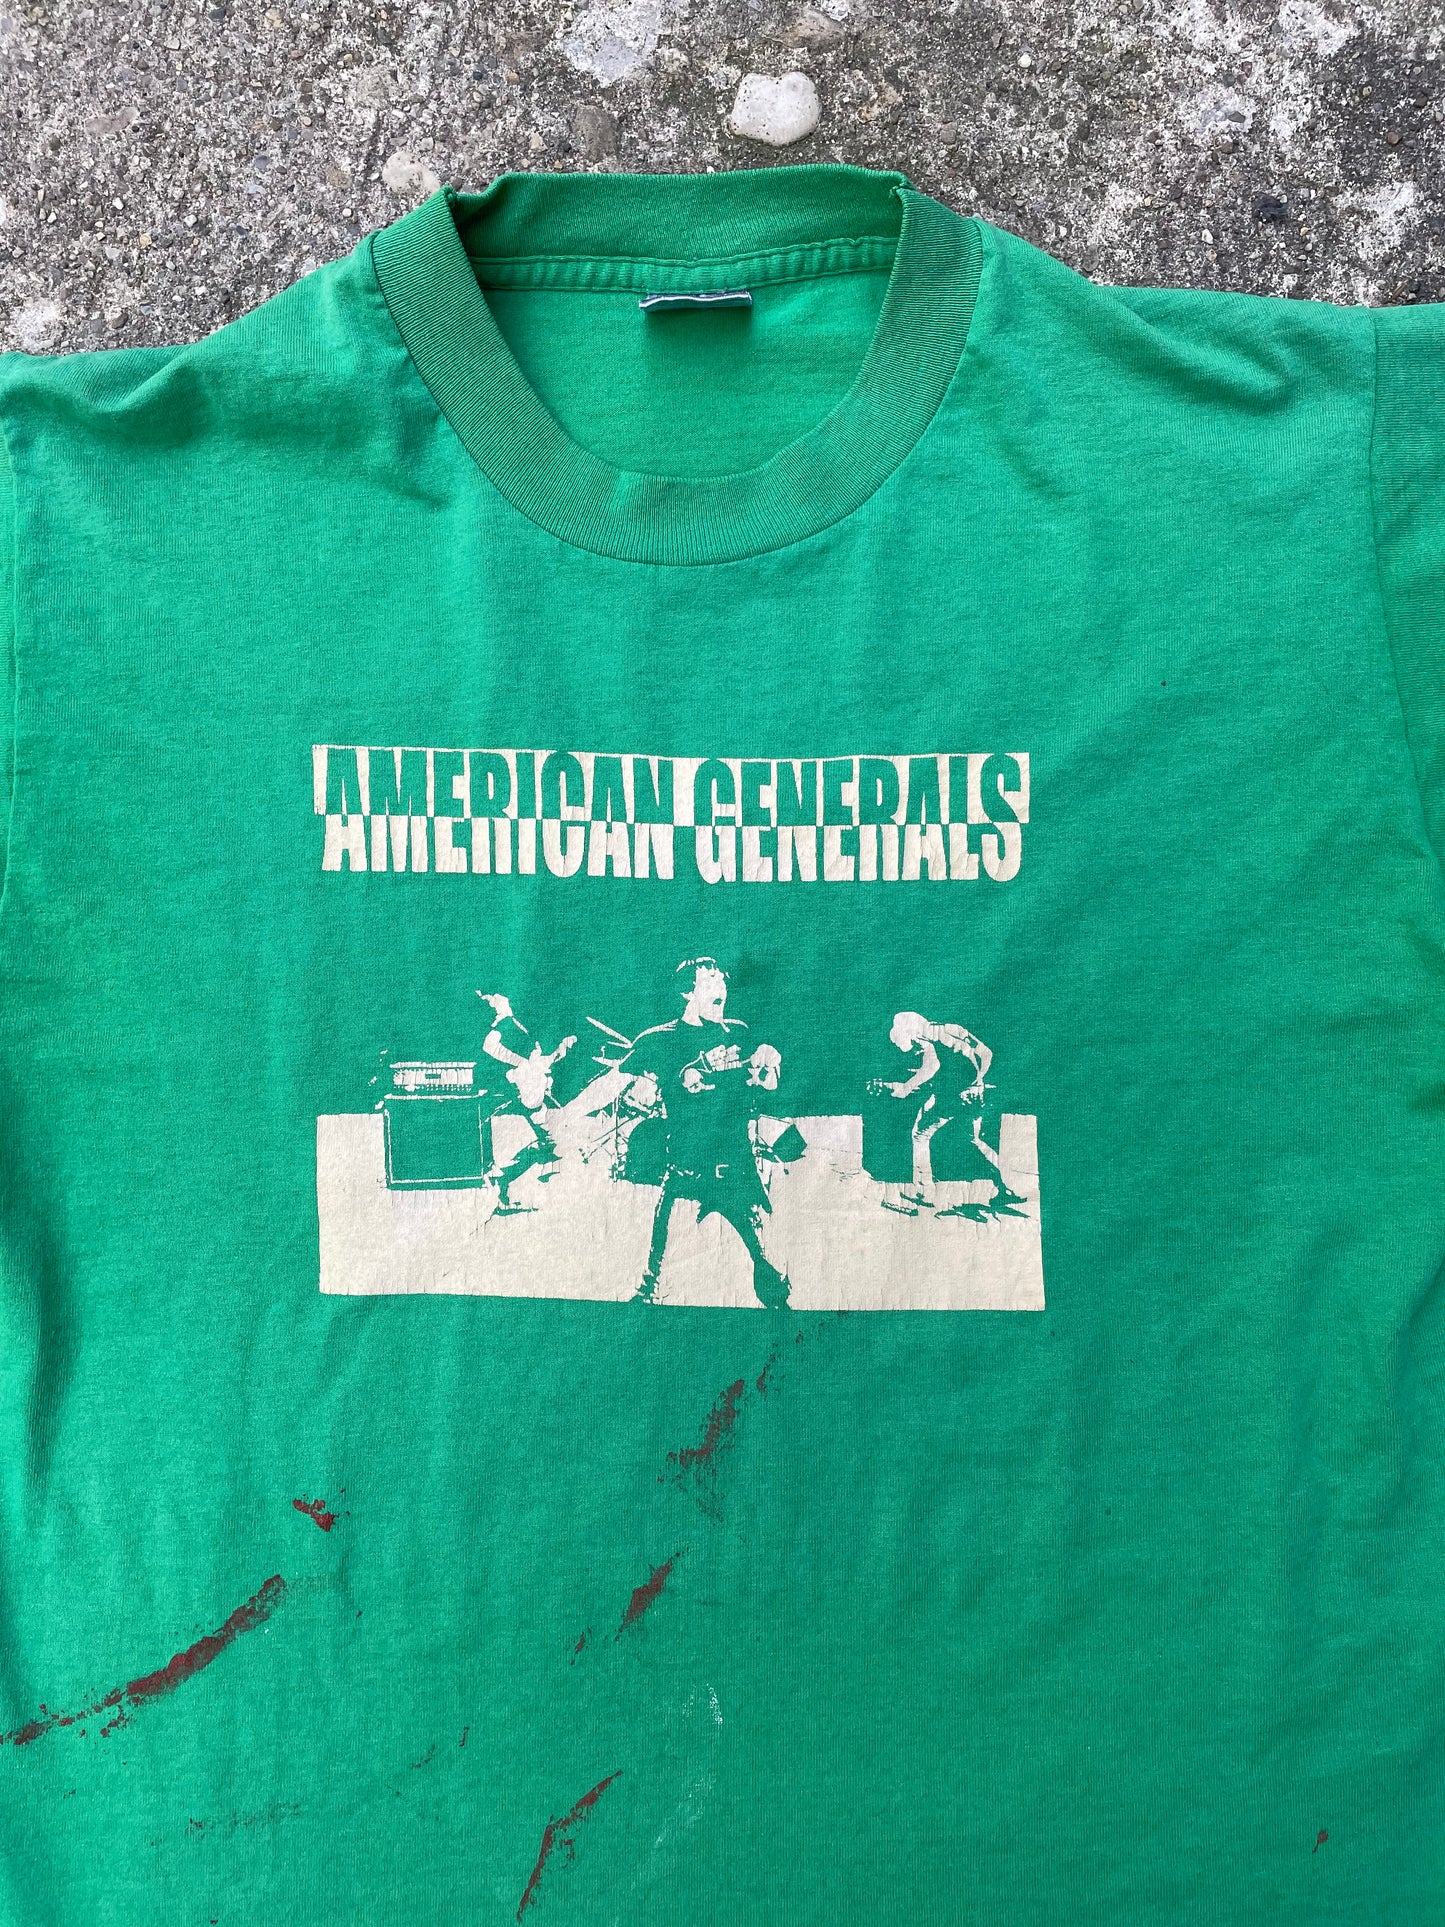 1990's American Generals Band T-Shirt - M